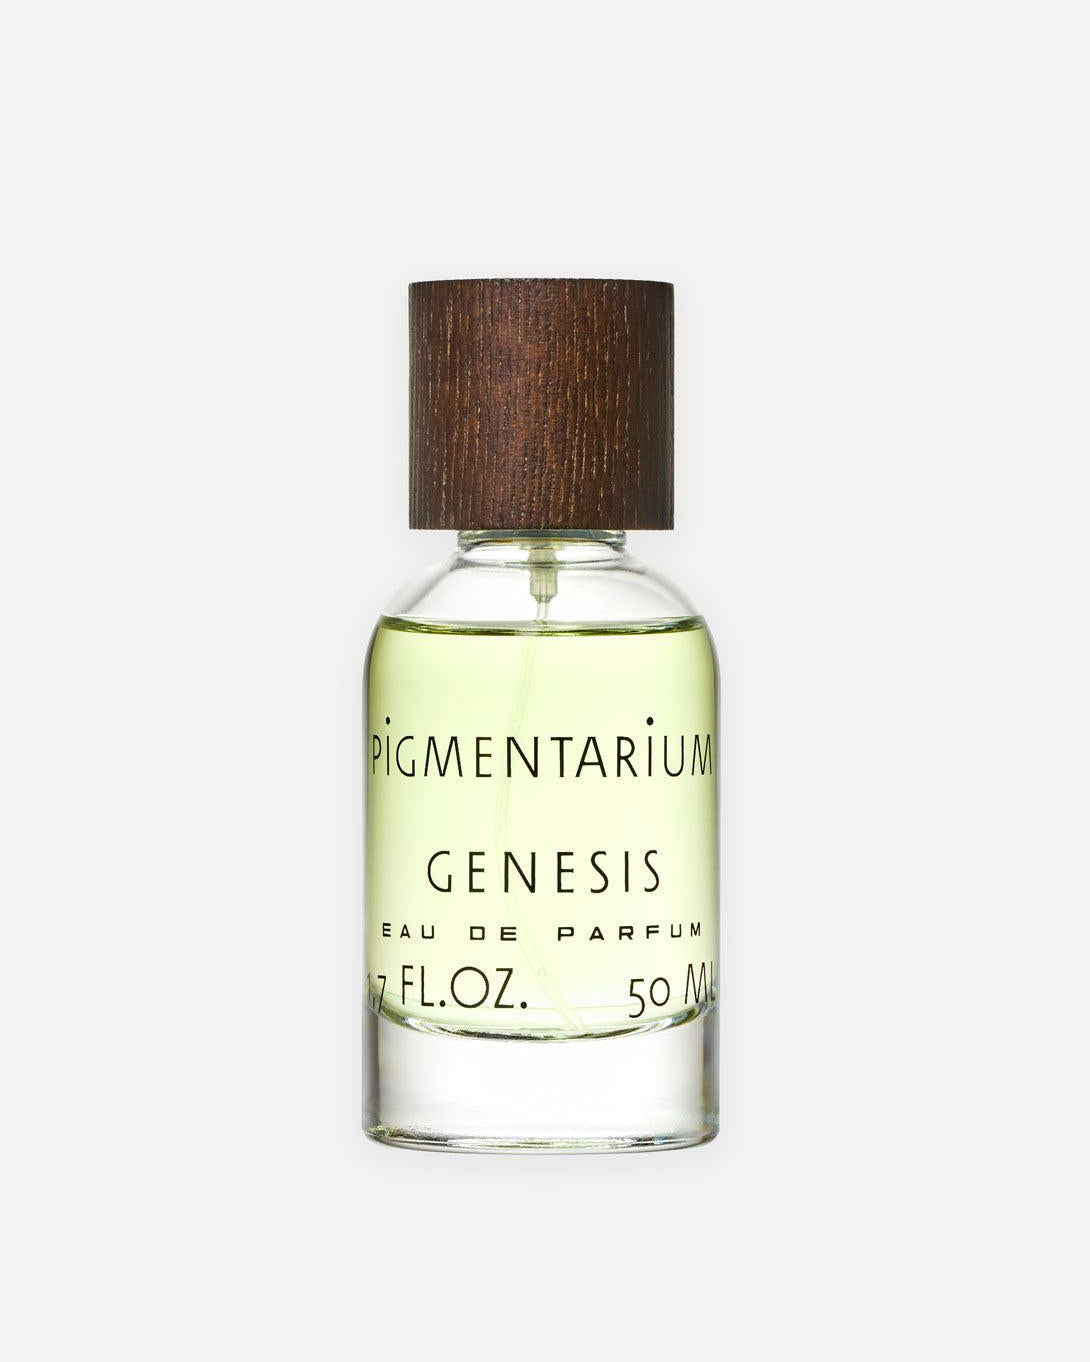 Genesis Perfume - Fragrance - Pigmentarium - Elevastor